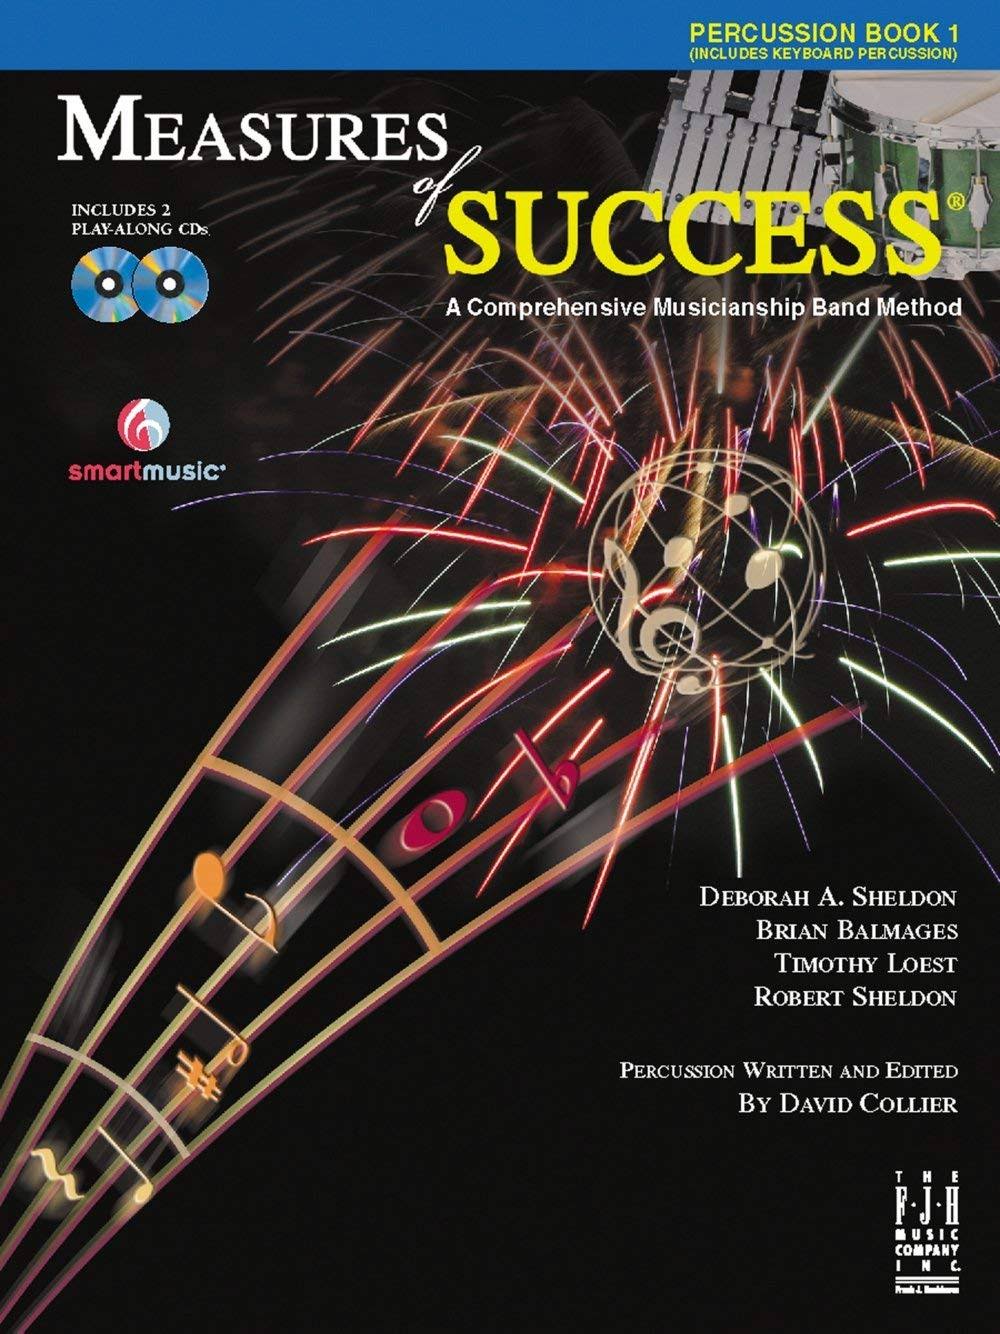 Fjh Music Measures of Success Percussion Book 1 - FJH Music Company